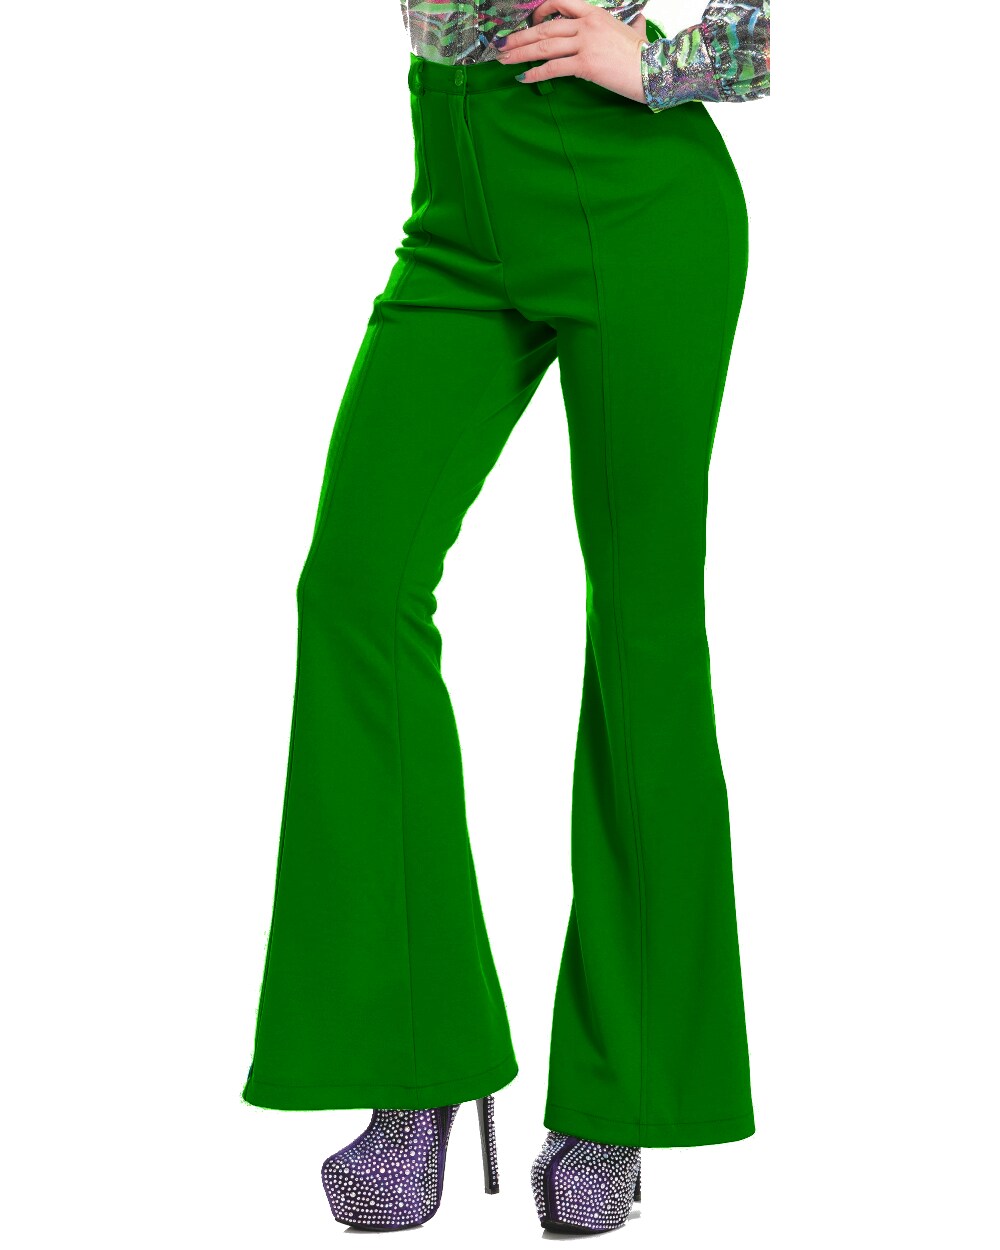 Womens 70s High Waisted Flared Green Disco Pants